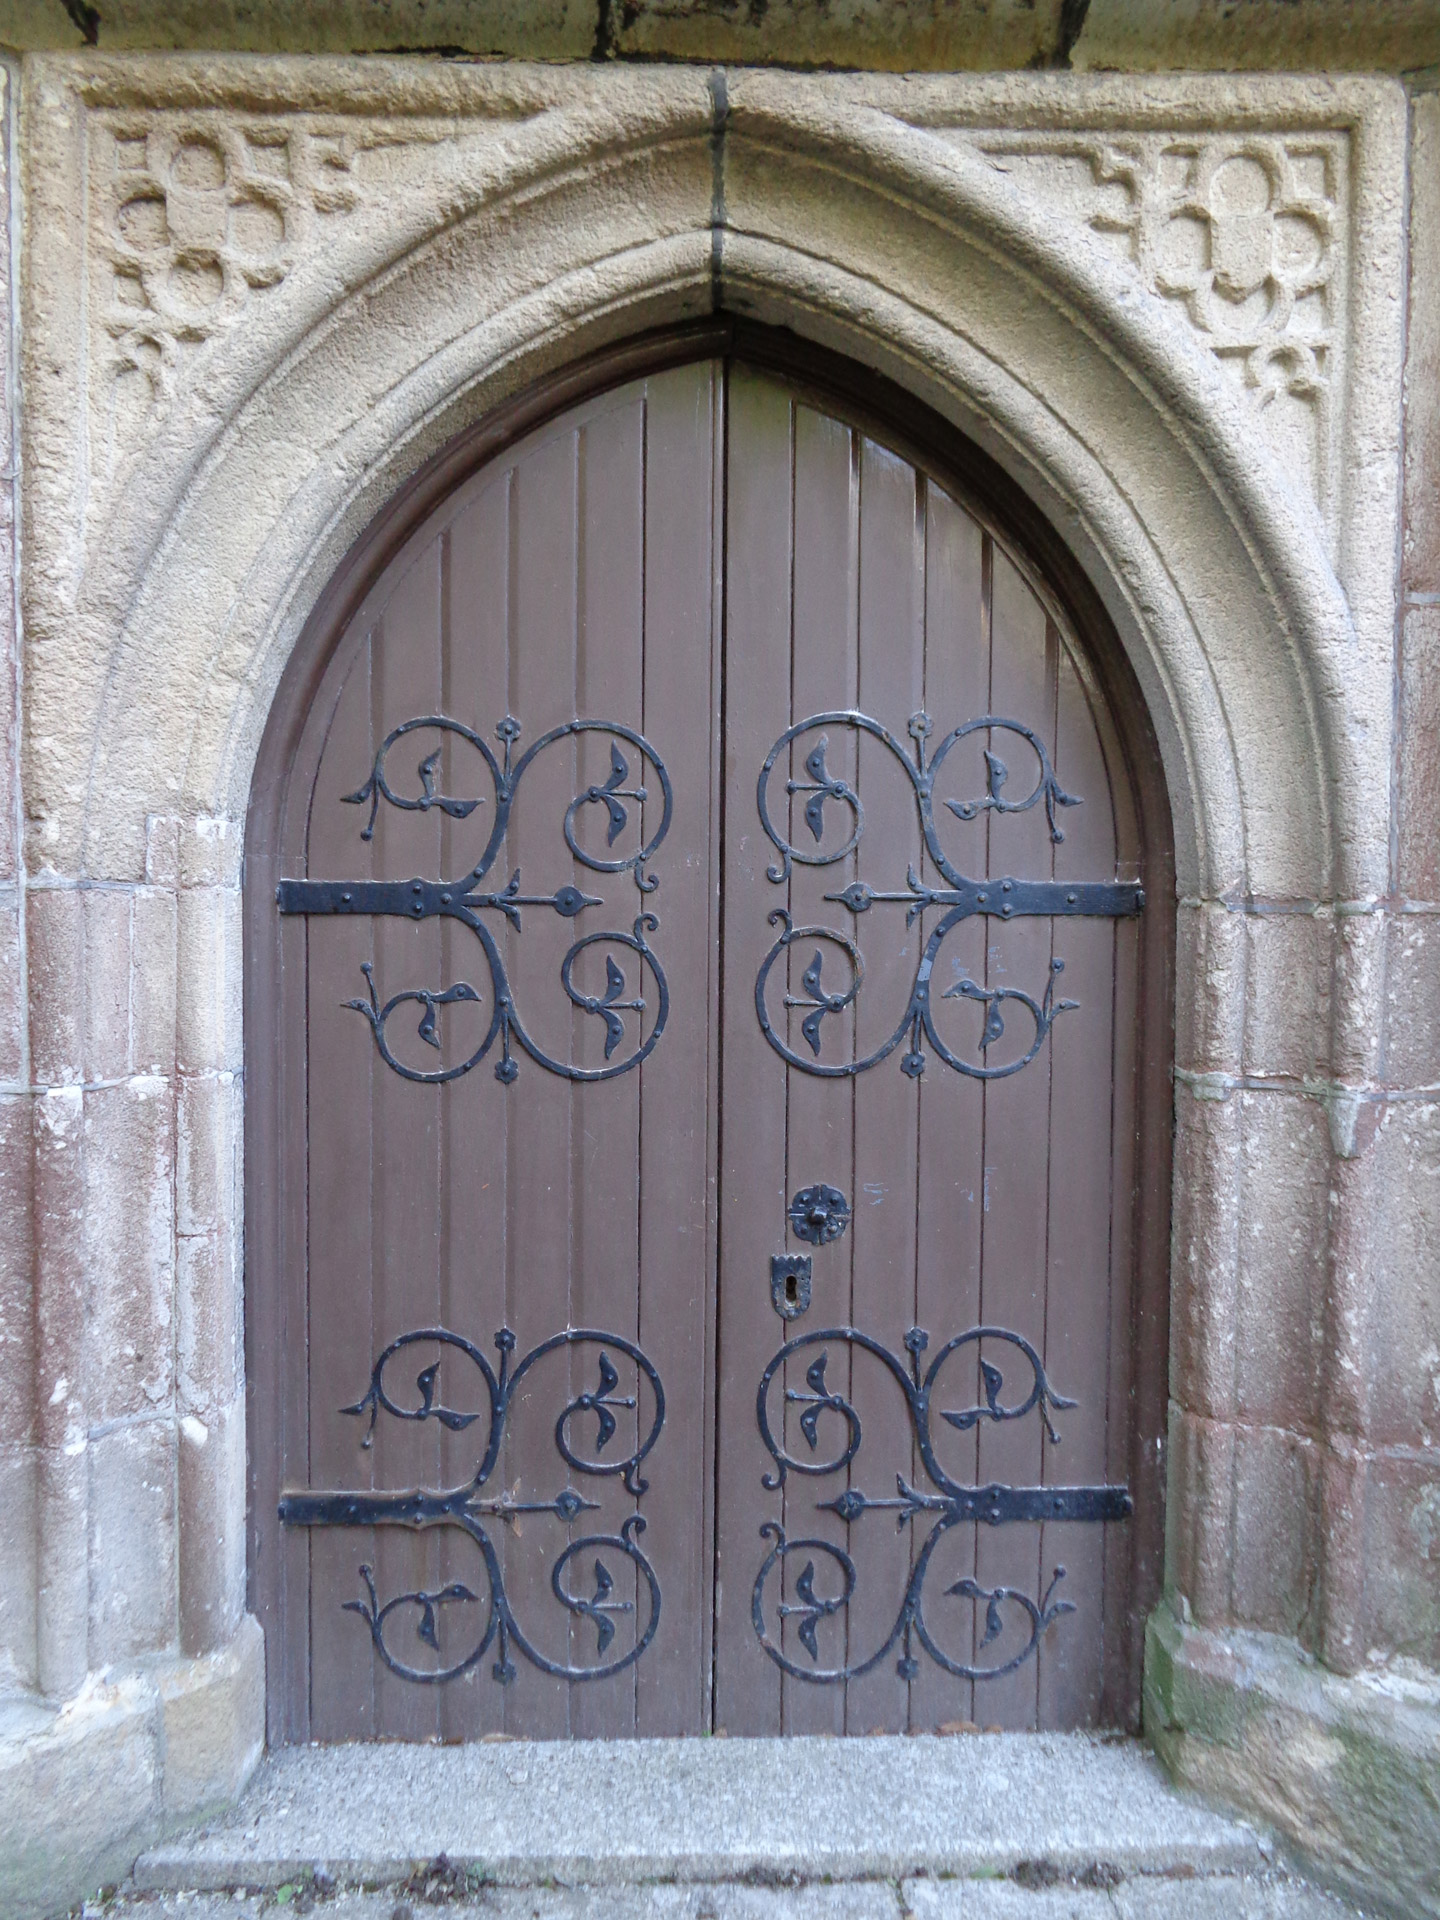 church door entrance free photo